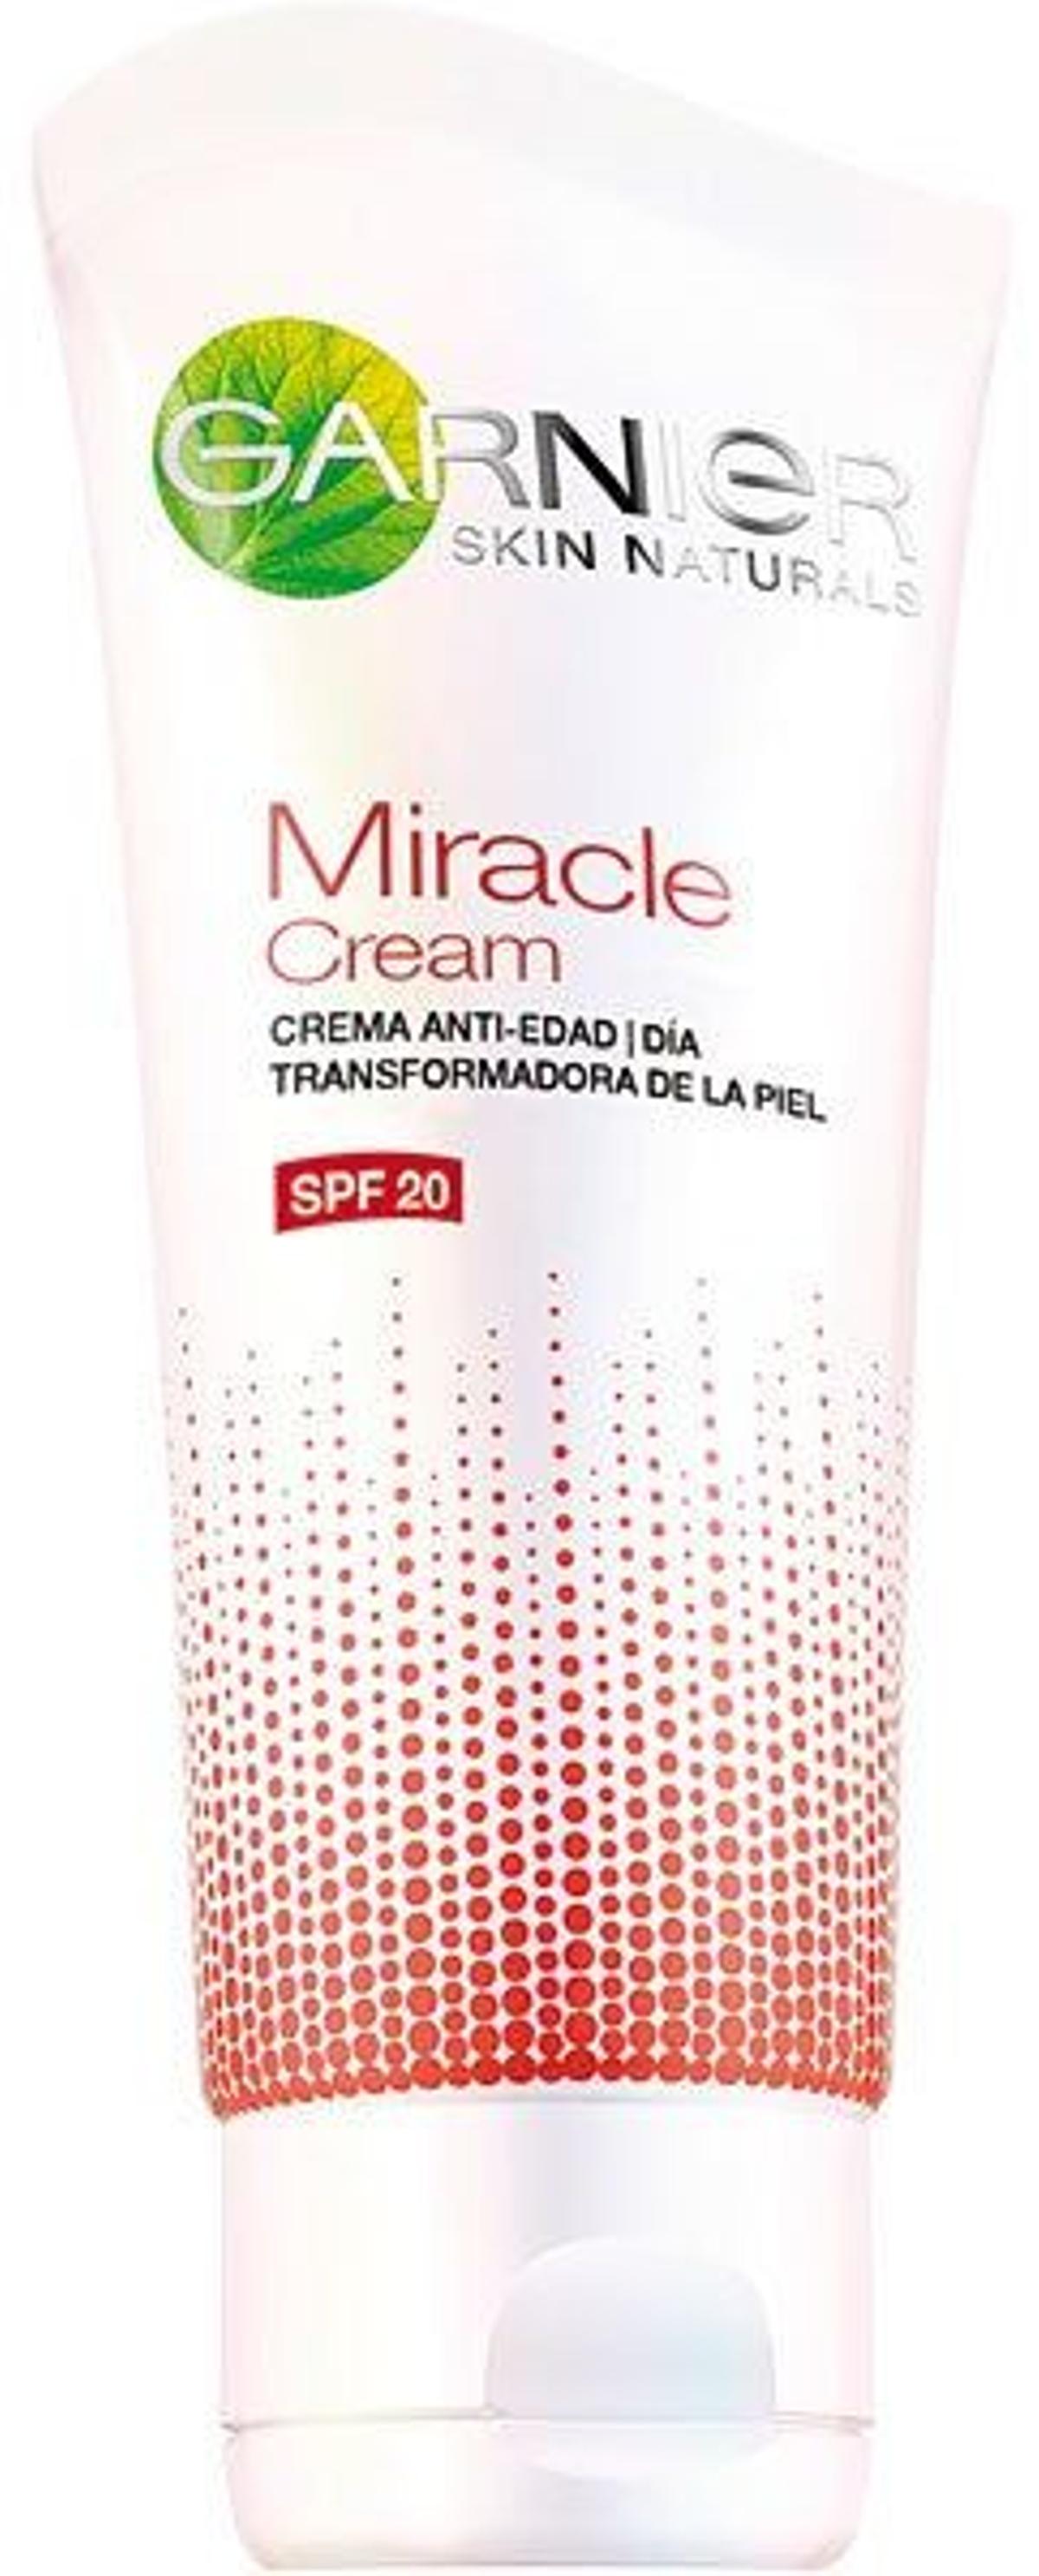 Miracle Cream de Garnier